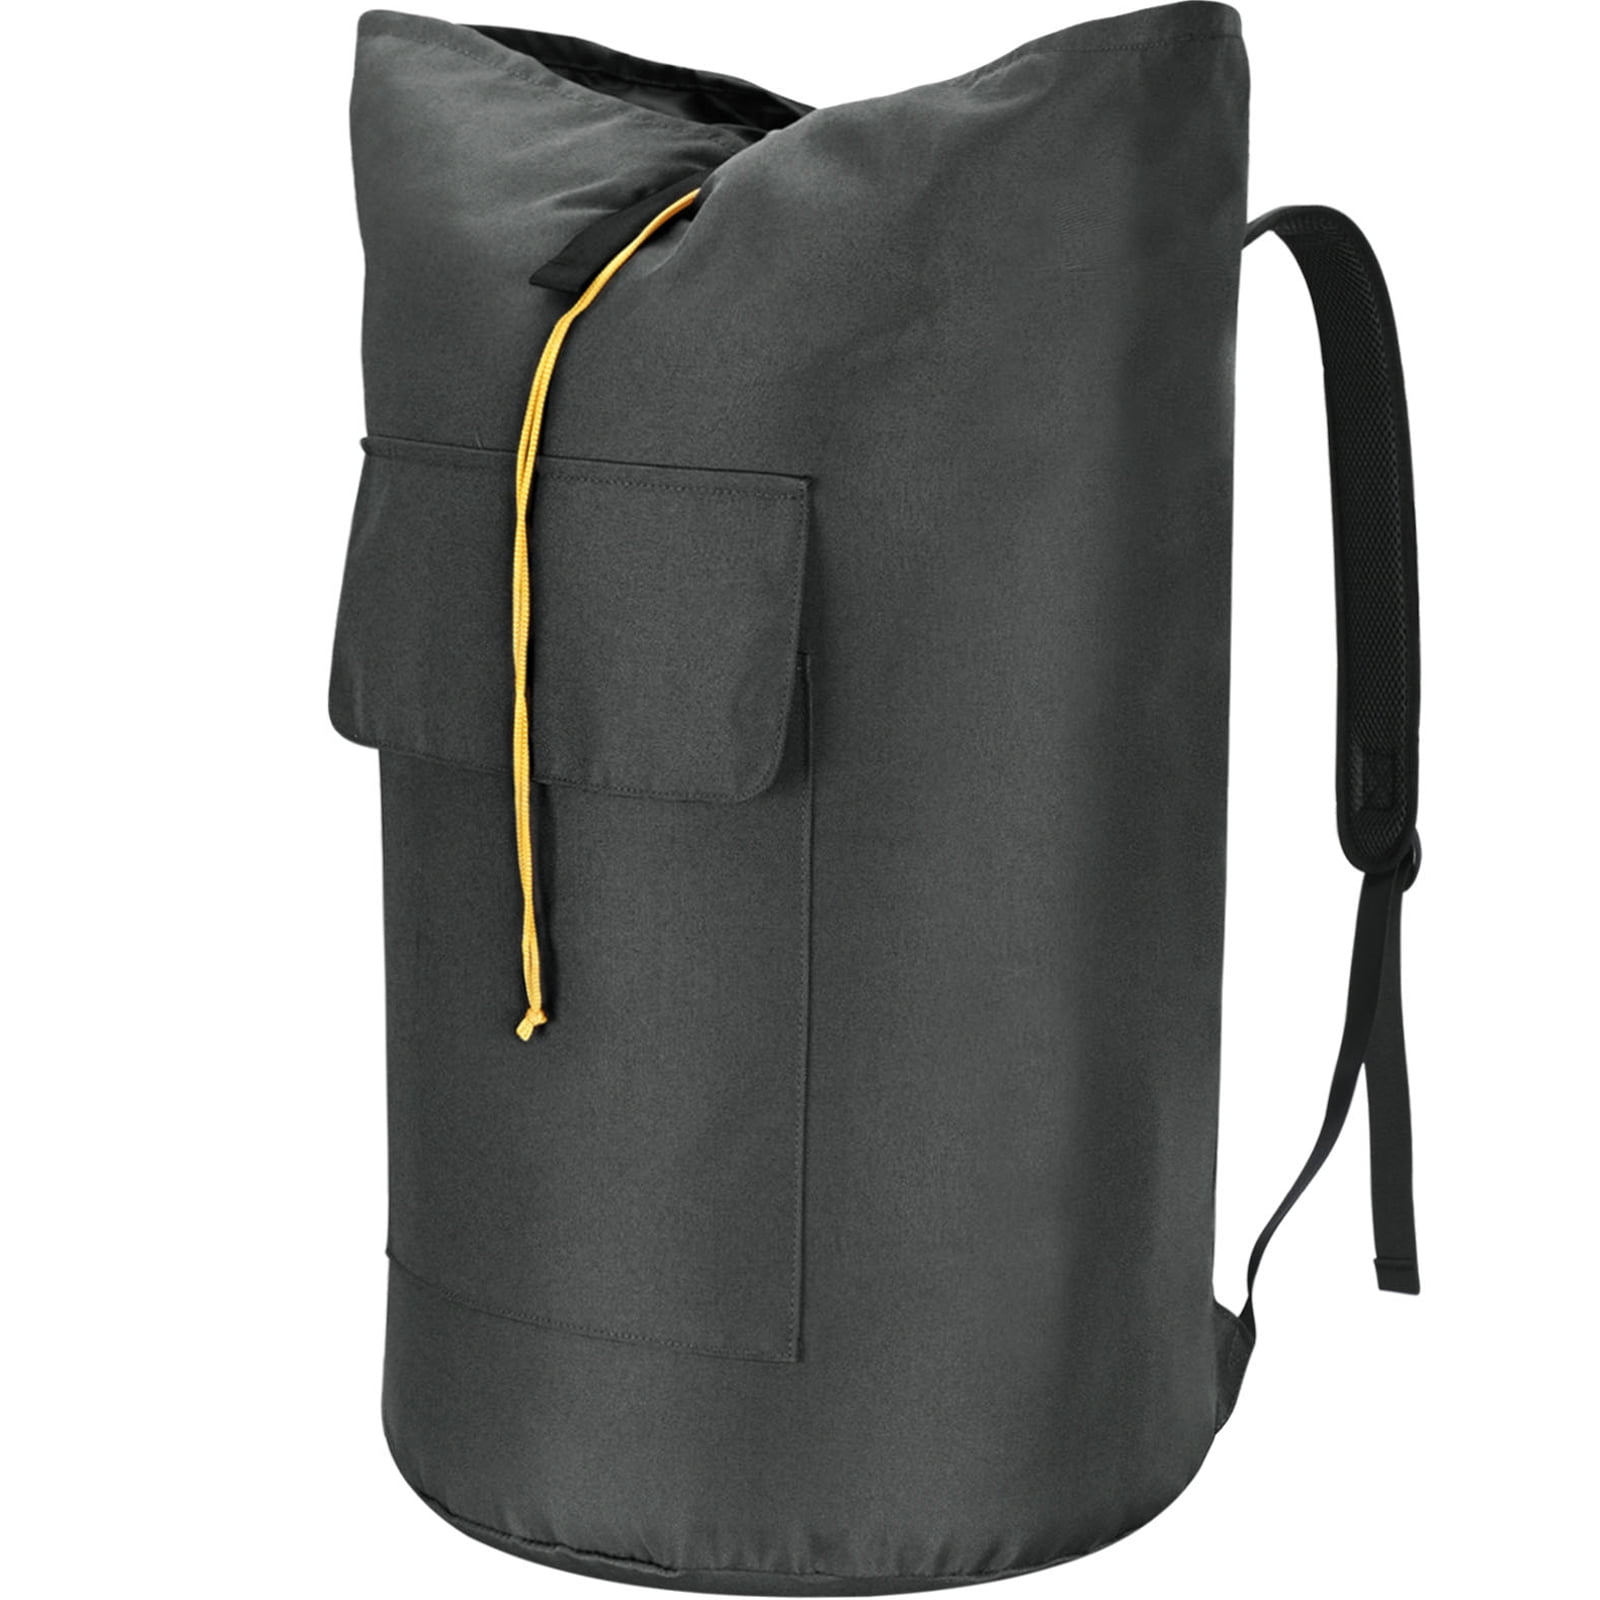 70L Laundry Bag Heavy Duty Extra Large, Sturdy Laundry Backpack